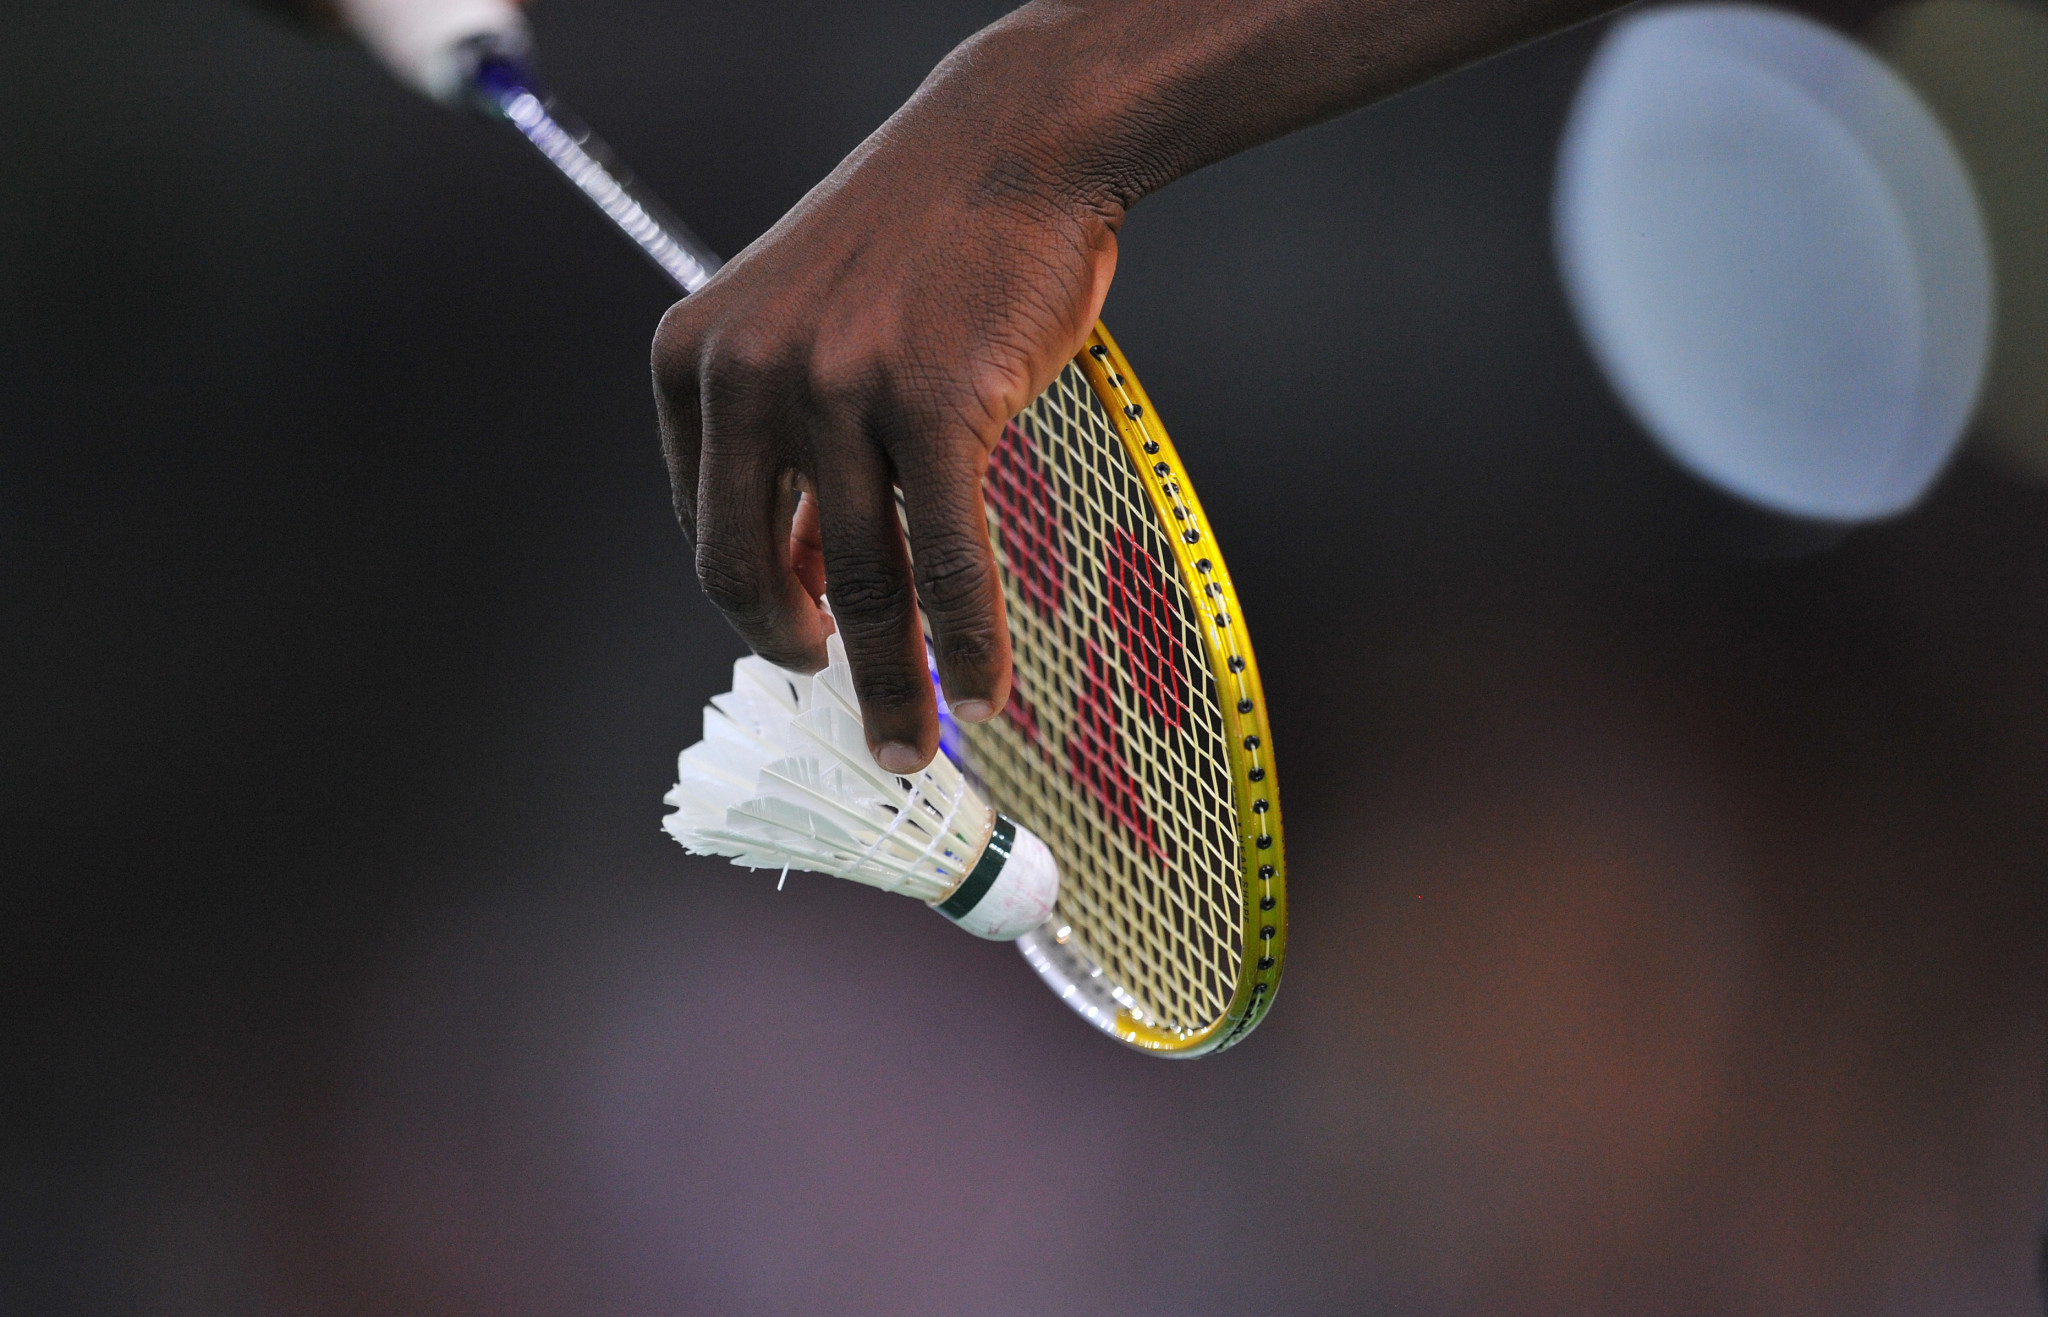 African Para badminton champion and Tokyo 2020 hopeful dies